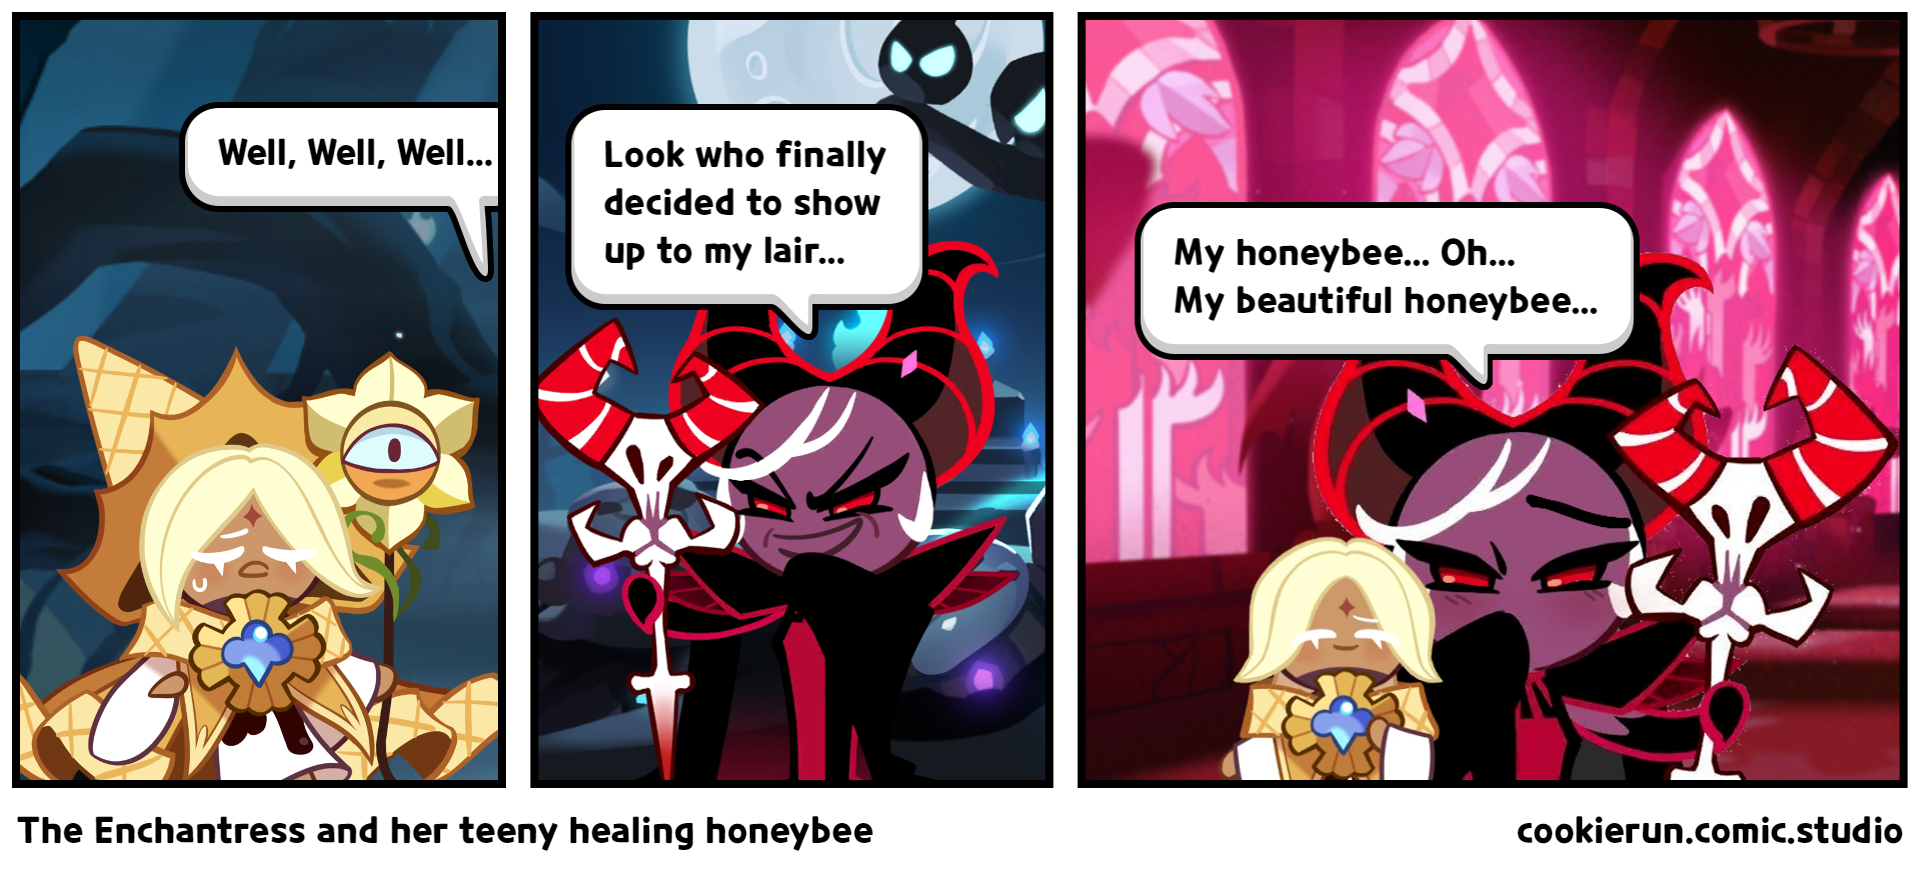 The Enchantress and her teeny healing honeybee